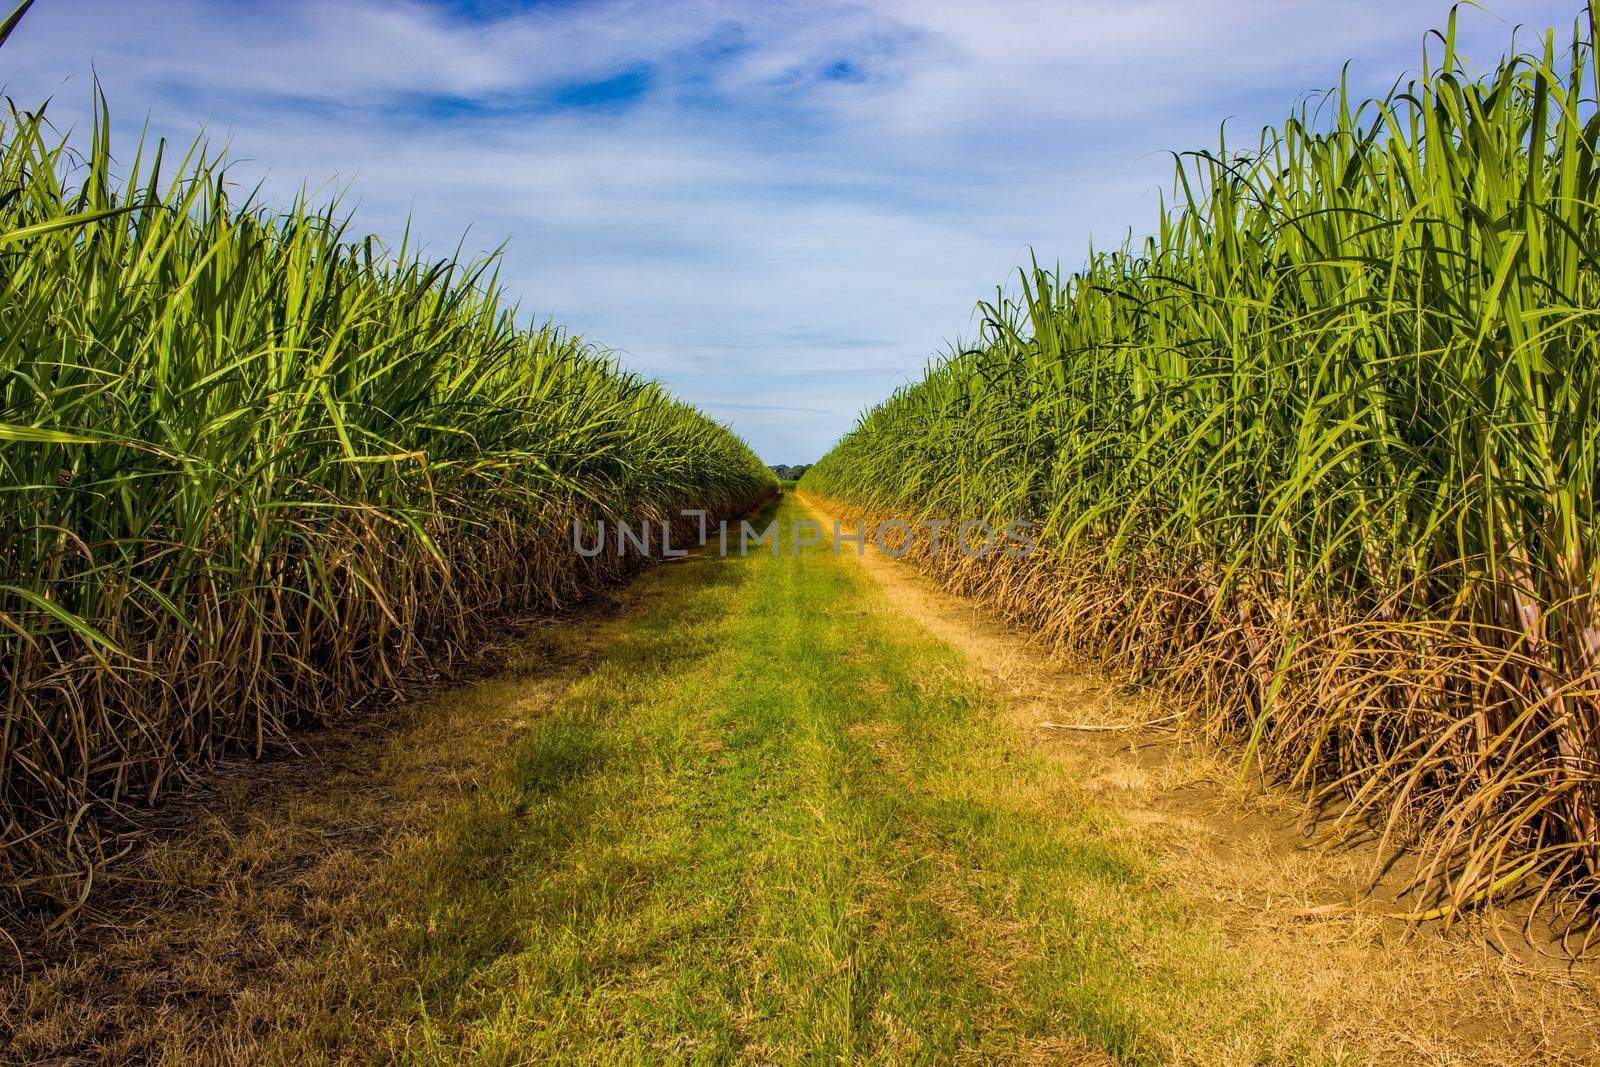 Service pathway running between sugarcane fields.